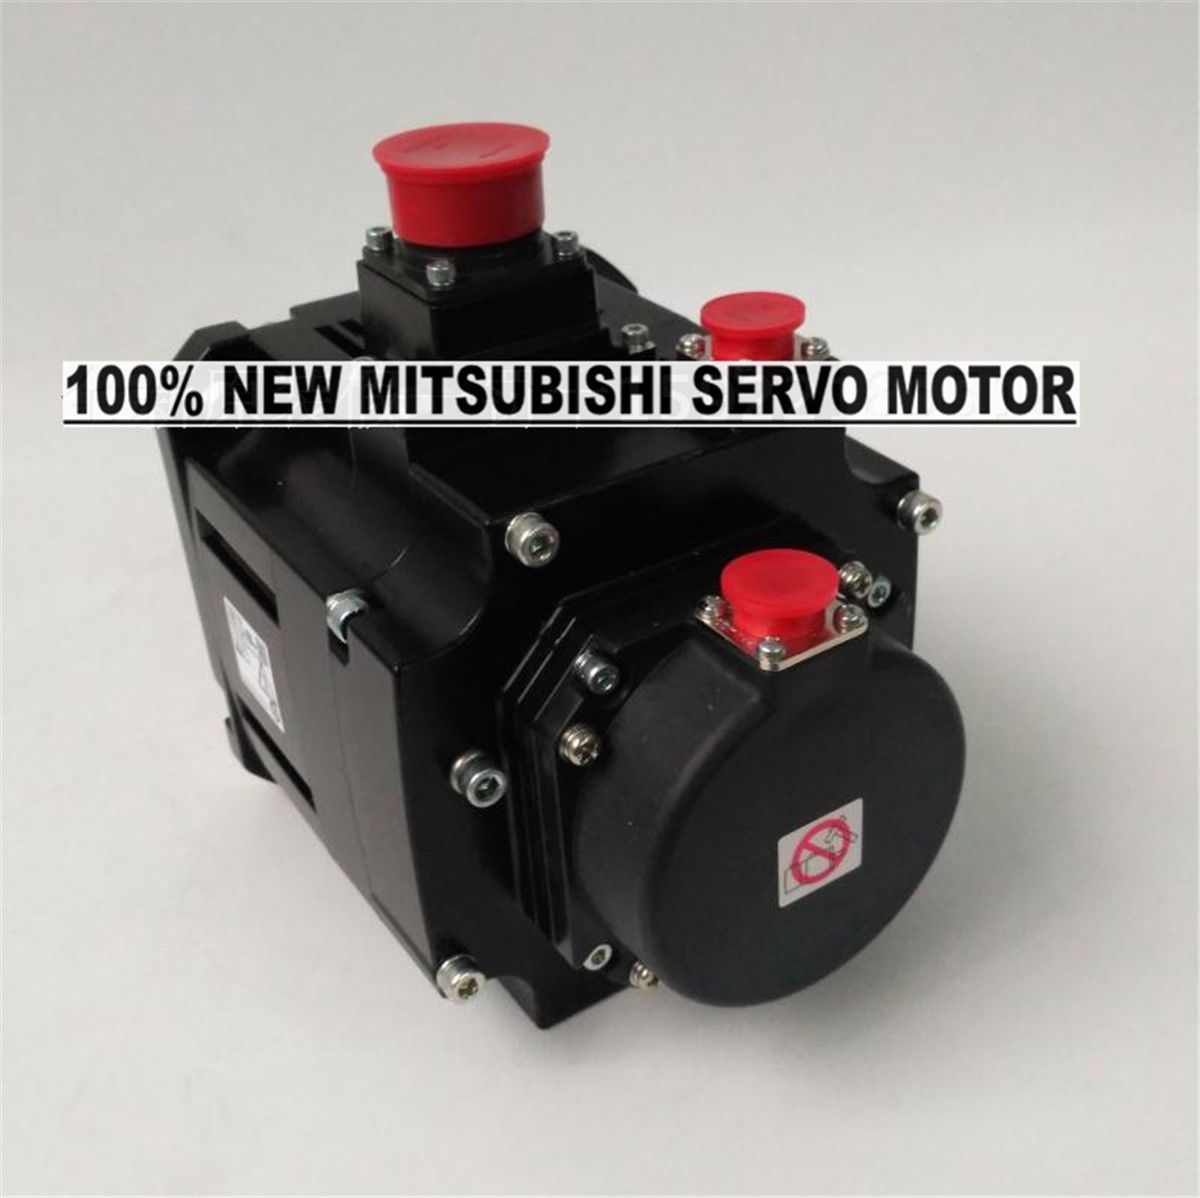 Brand New Mitsubishi Servo Motor HG-SR102BJ in box HGSR102BJ - Click Image to Close